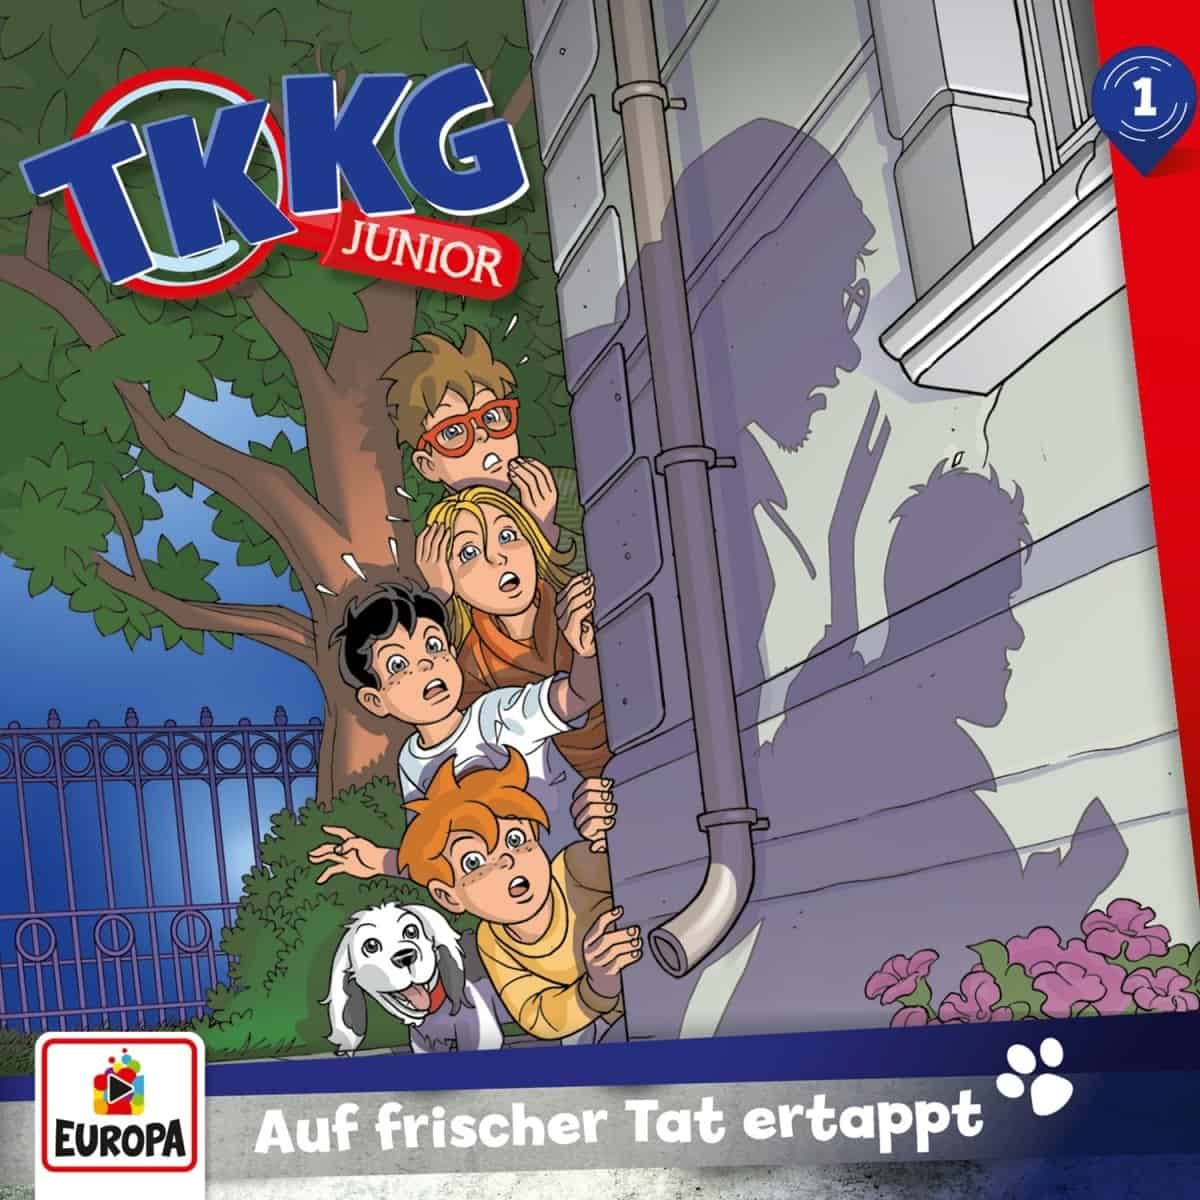 TKKG junior – Auf frischer Tat ertappt (Hörspielserie, Folge 1)